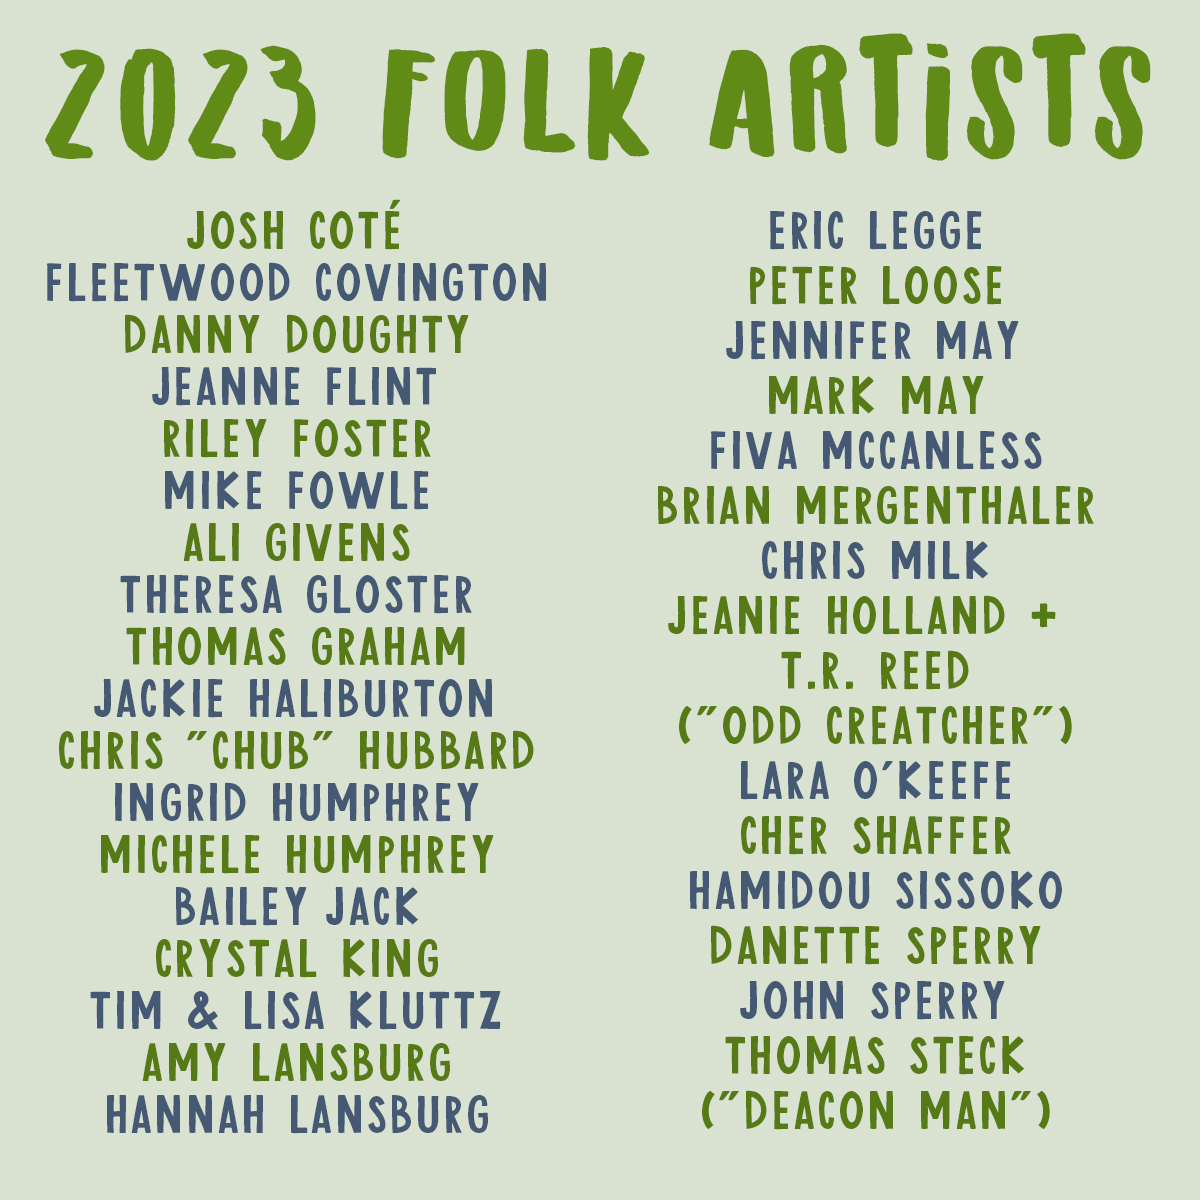 fearrington folk art 2023 list of artists